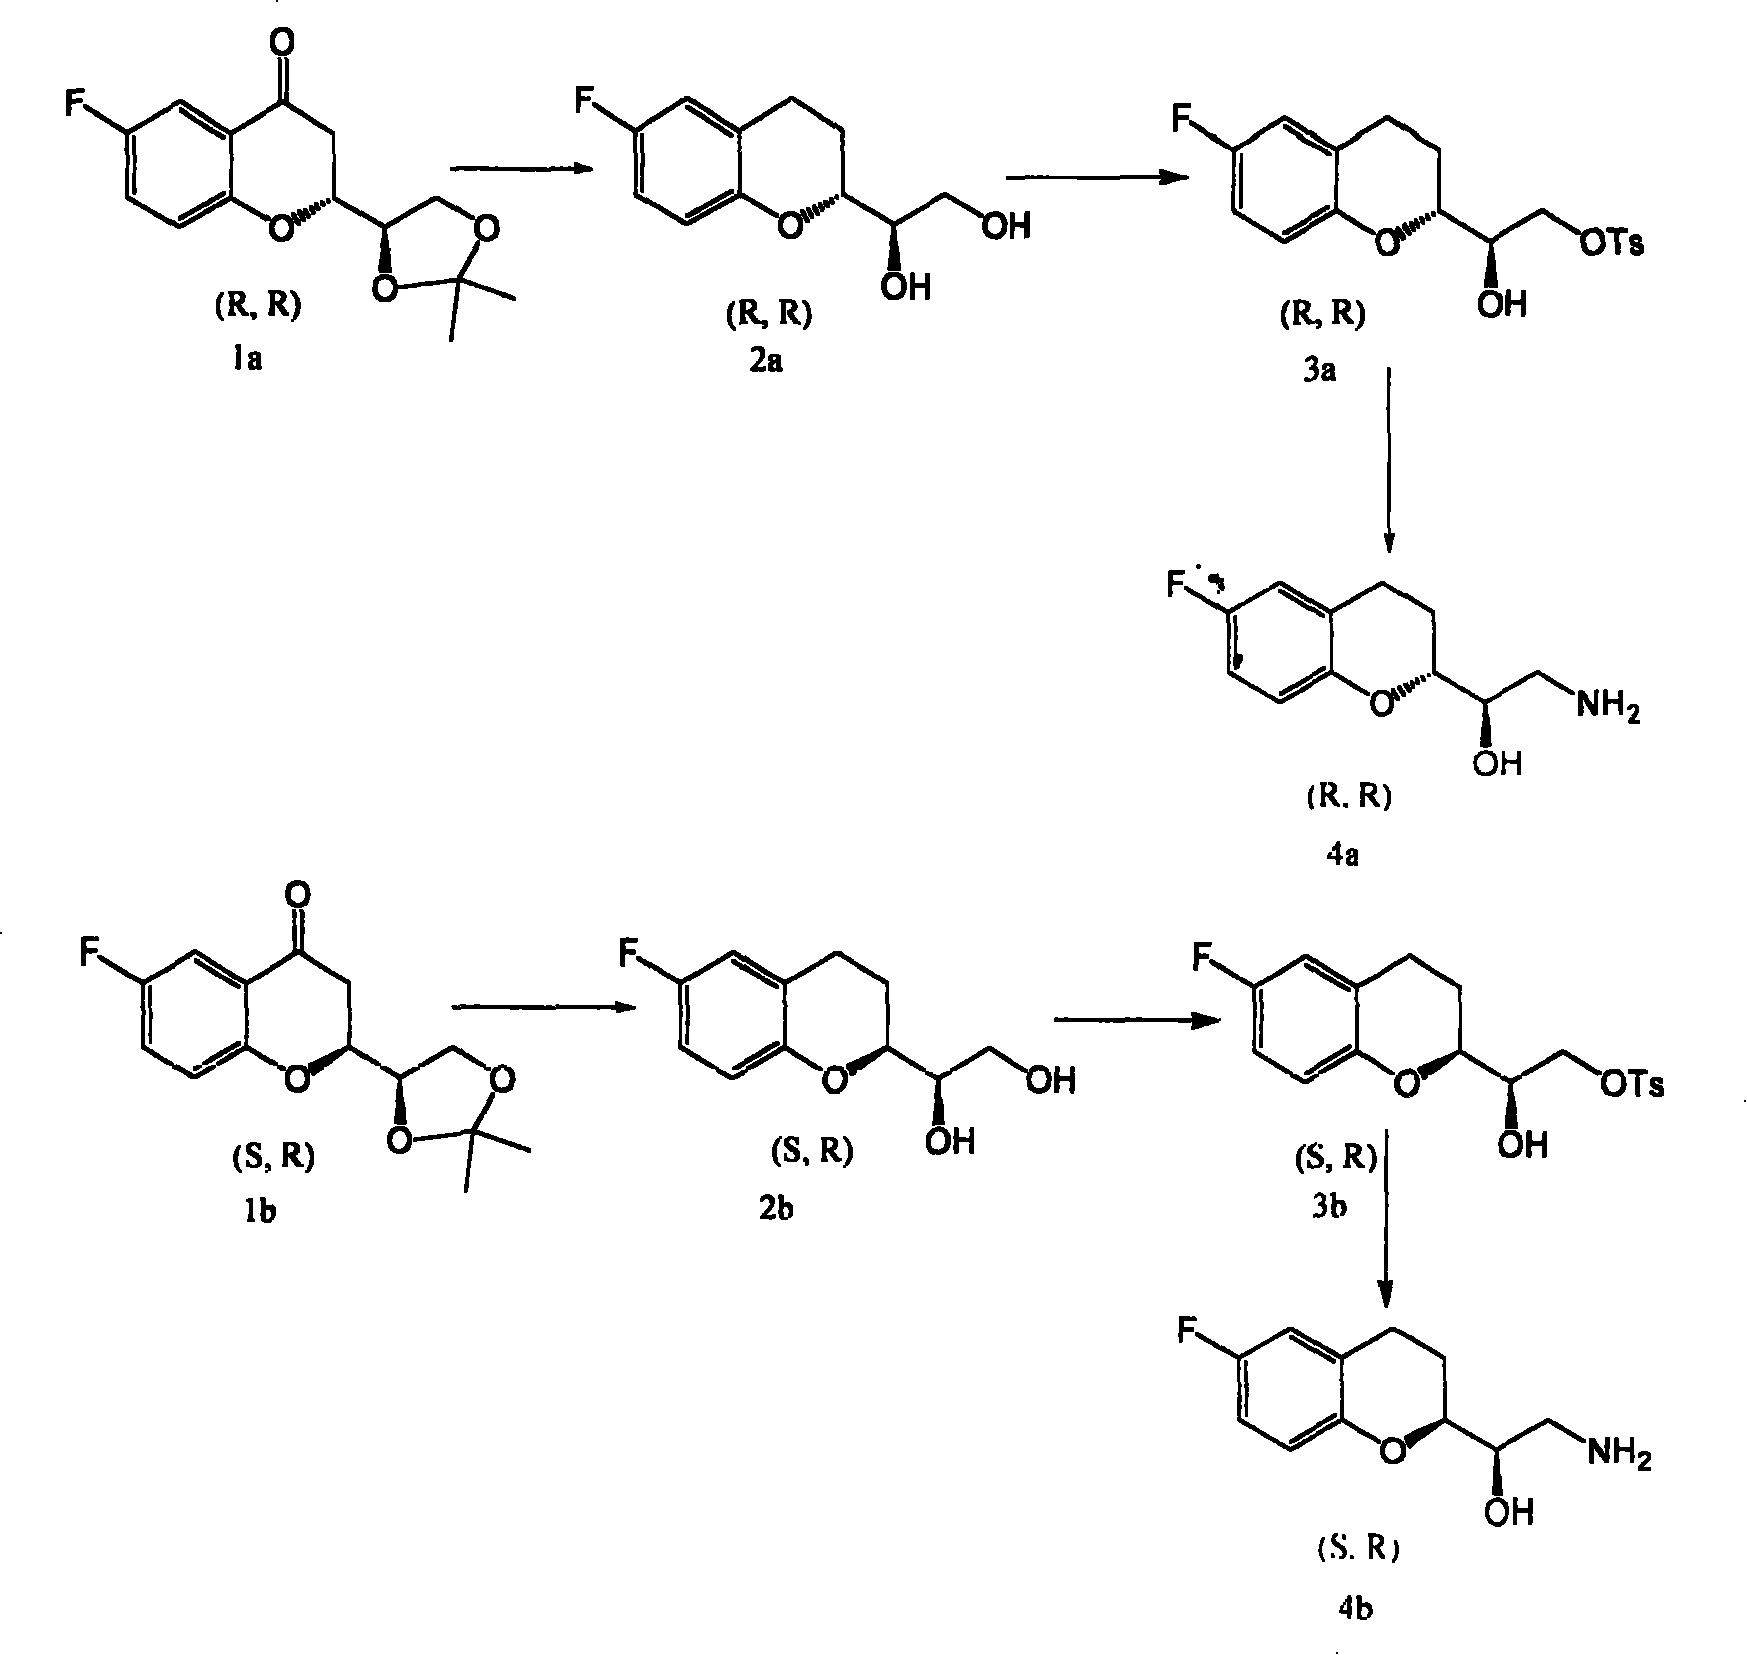 Synthetic process of chiral 2-amido-1-(6-fluorine-3,4-dihydrobenzopyranyl) alCohol